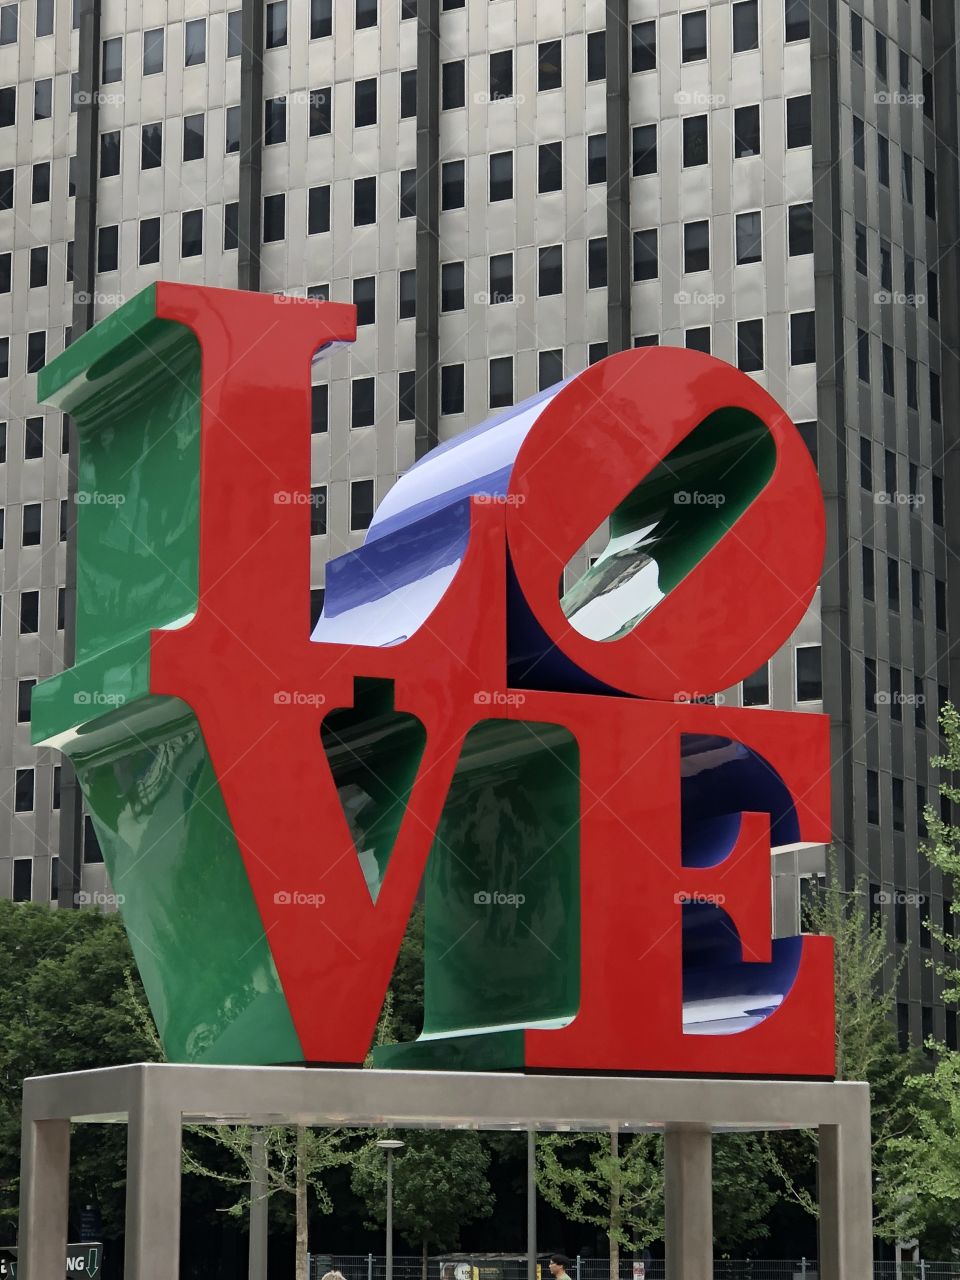 ‘ All you need us love ‘ Famous art in Love Park, Philadelphia.